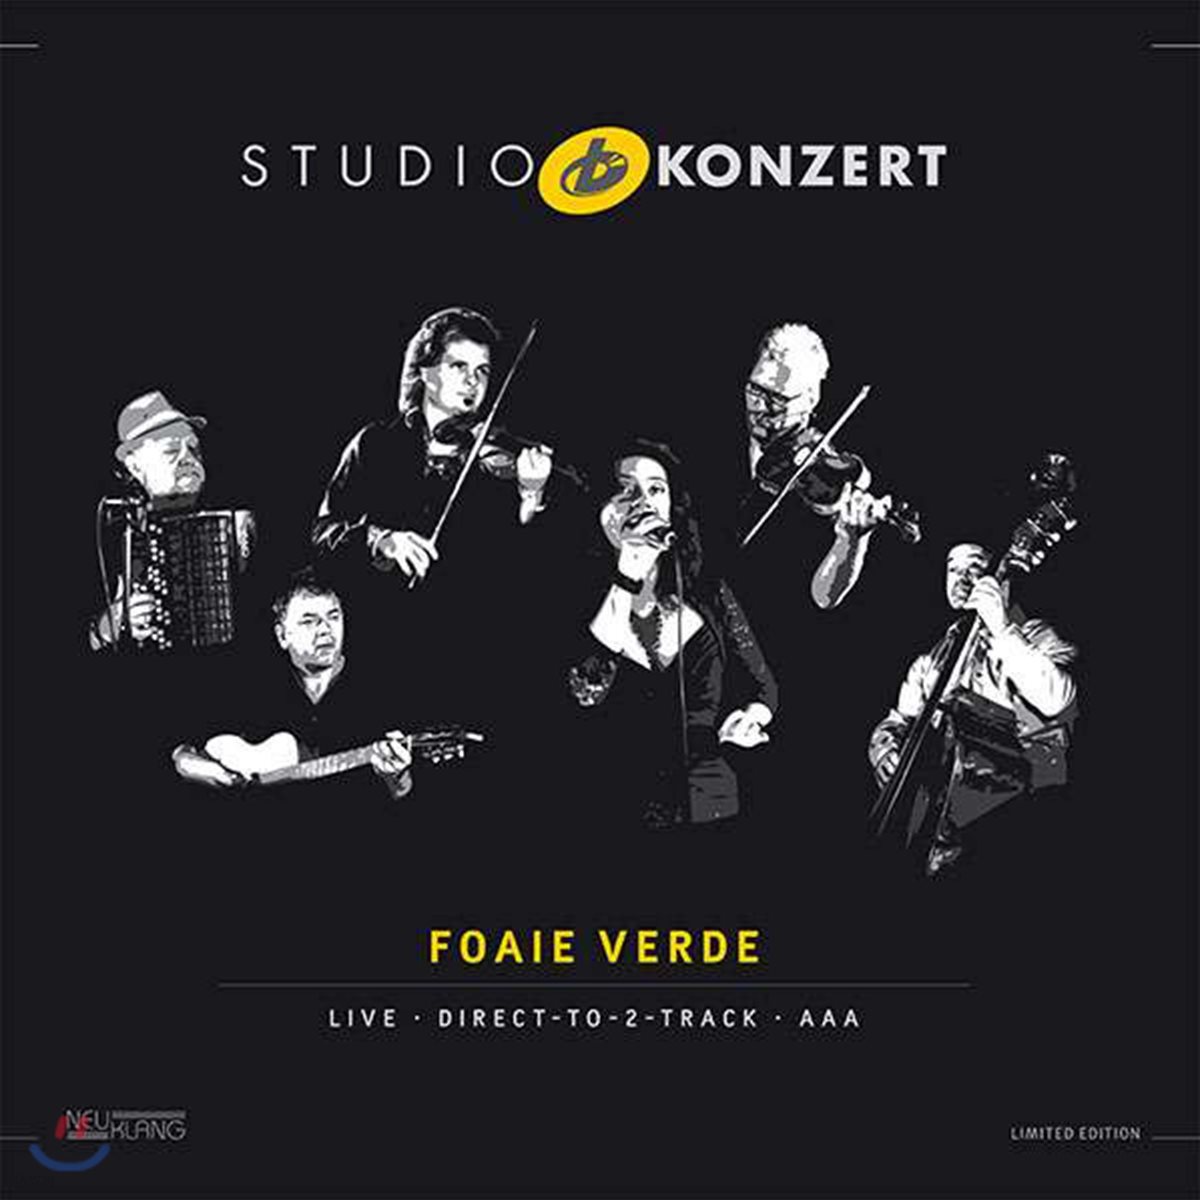 Foaie Verde (포아이에 베르데) - Studio Konzert [Limited Edition LP]